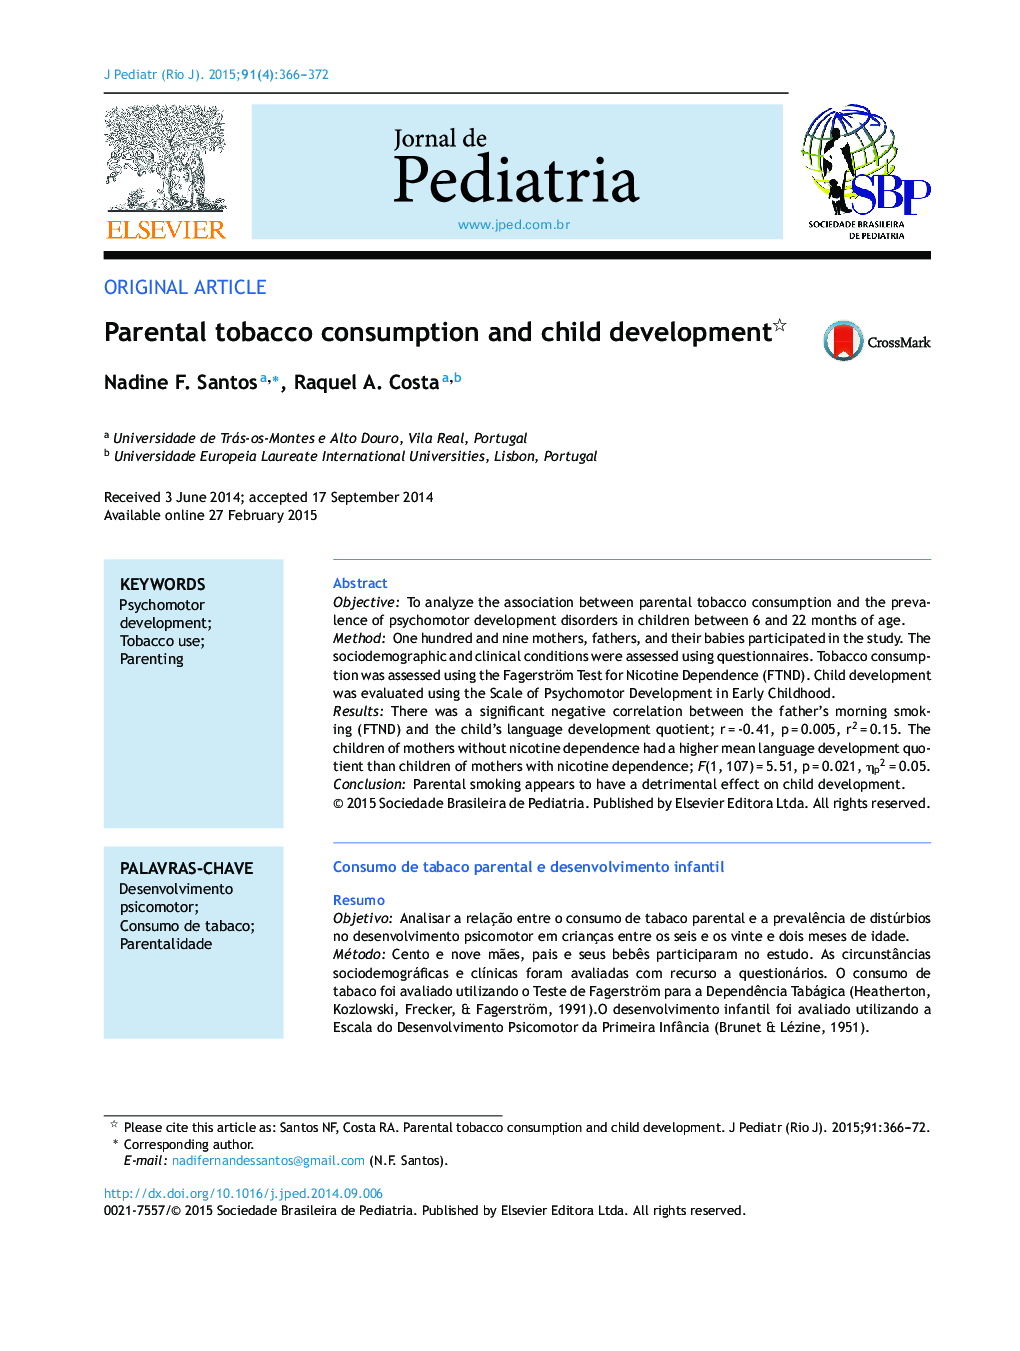 Parental tobacco consumption and child development 